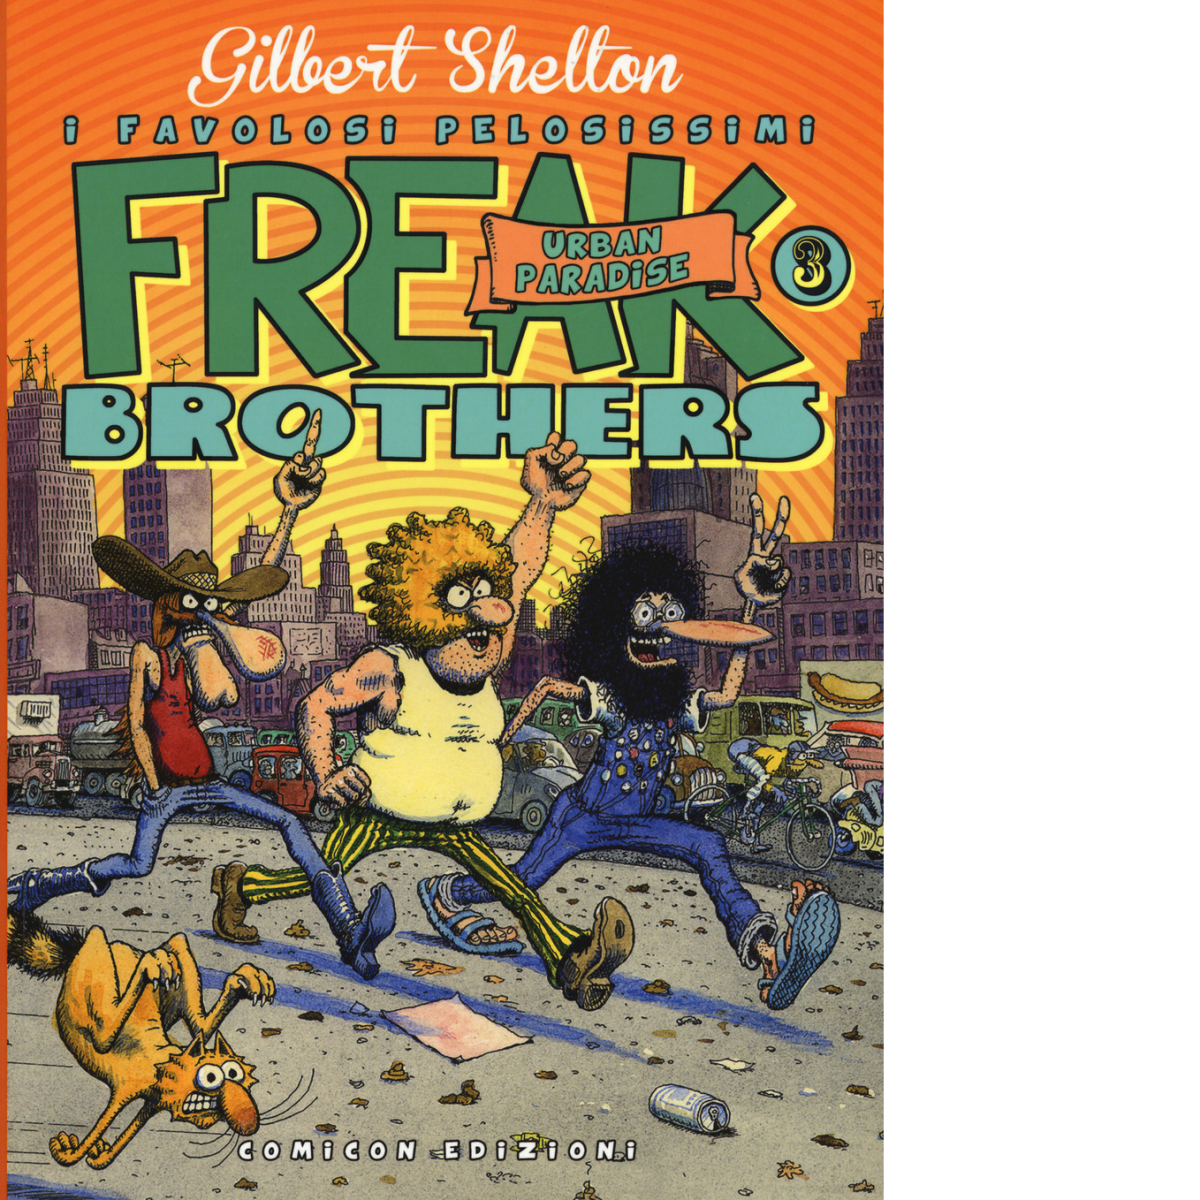 Freak brothers VOL.3 - Gilbert Shelton, Dave Sheridan - Comicon, 2019